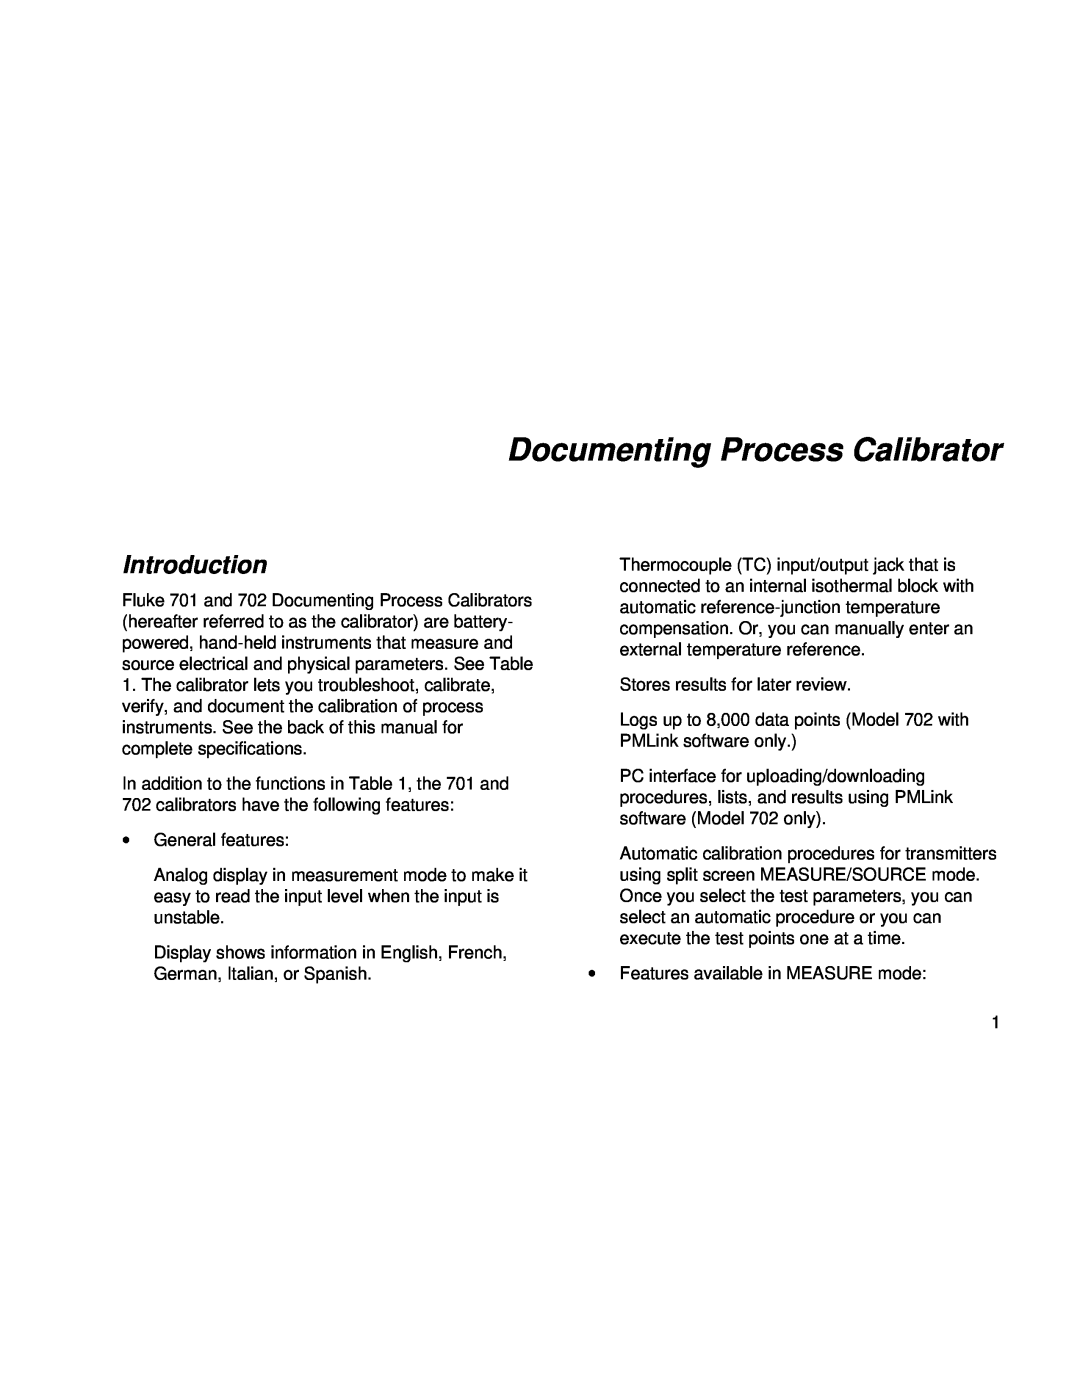 Fluke Rev. 4 user manual Documenting Process Calibrator, Introduction 